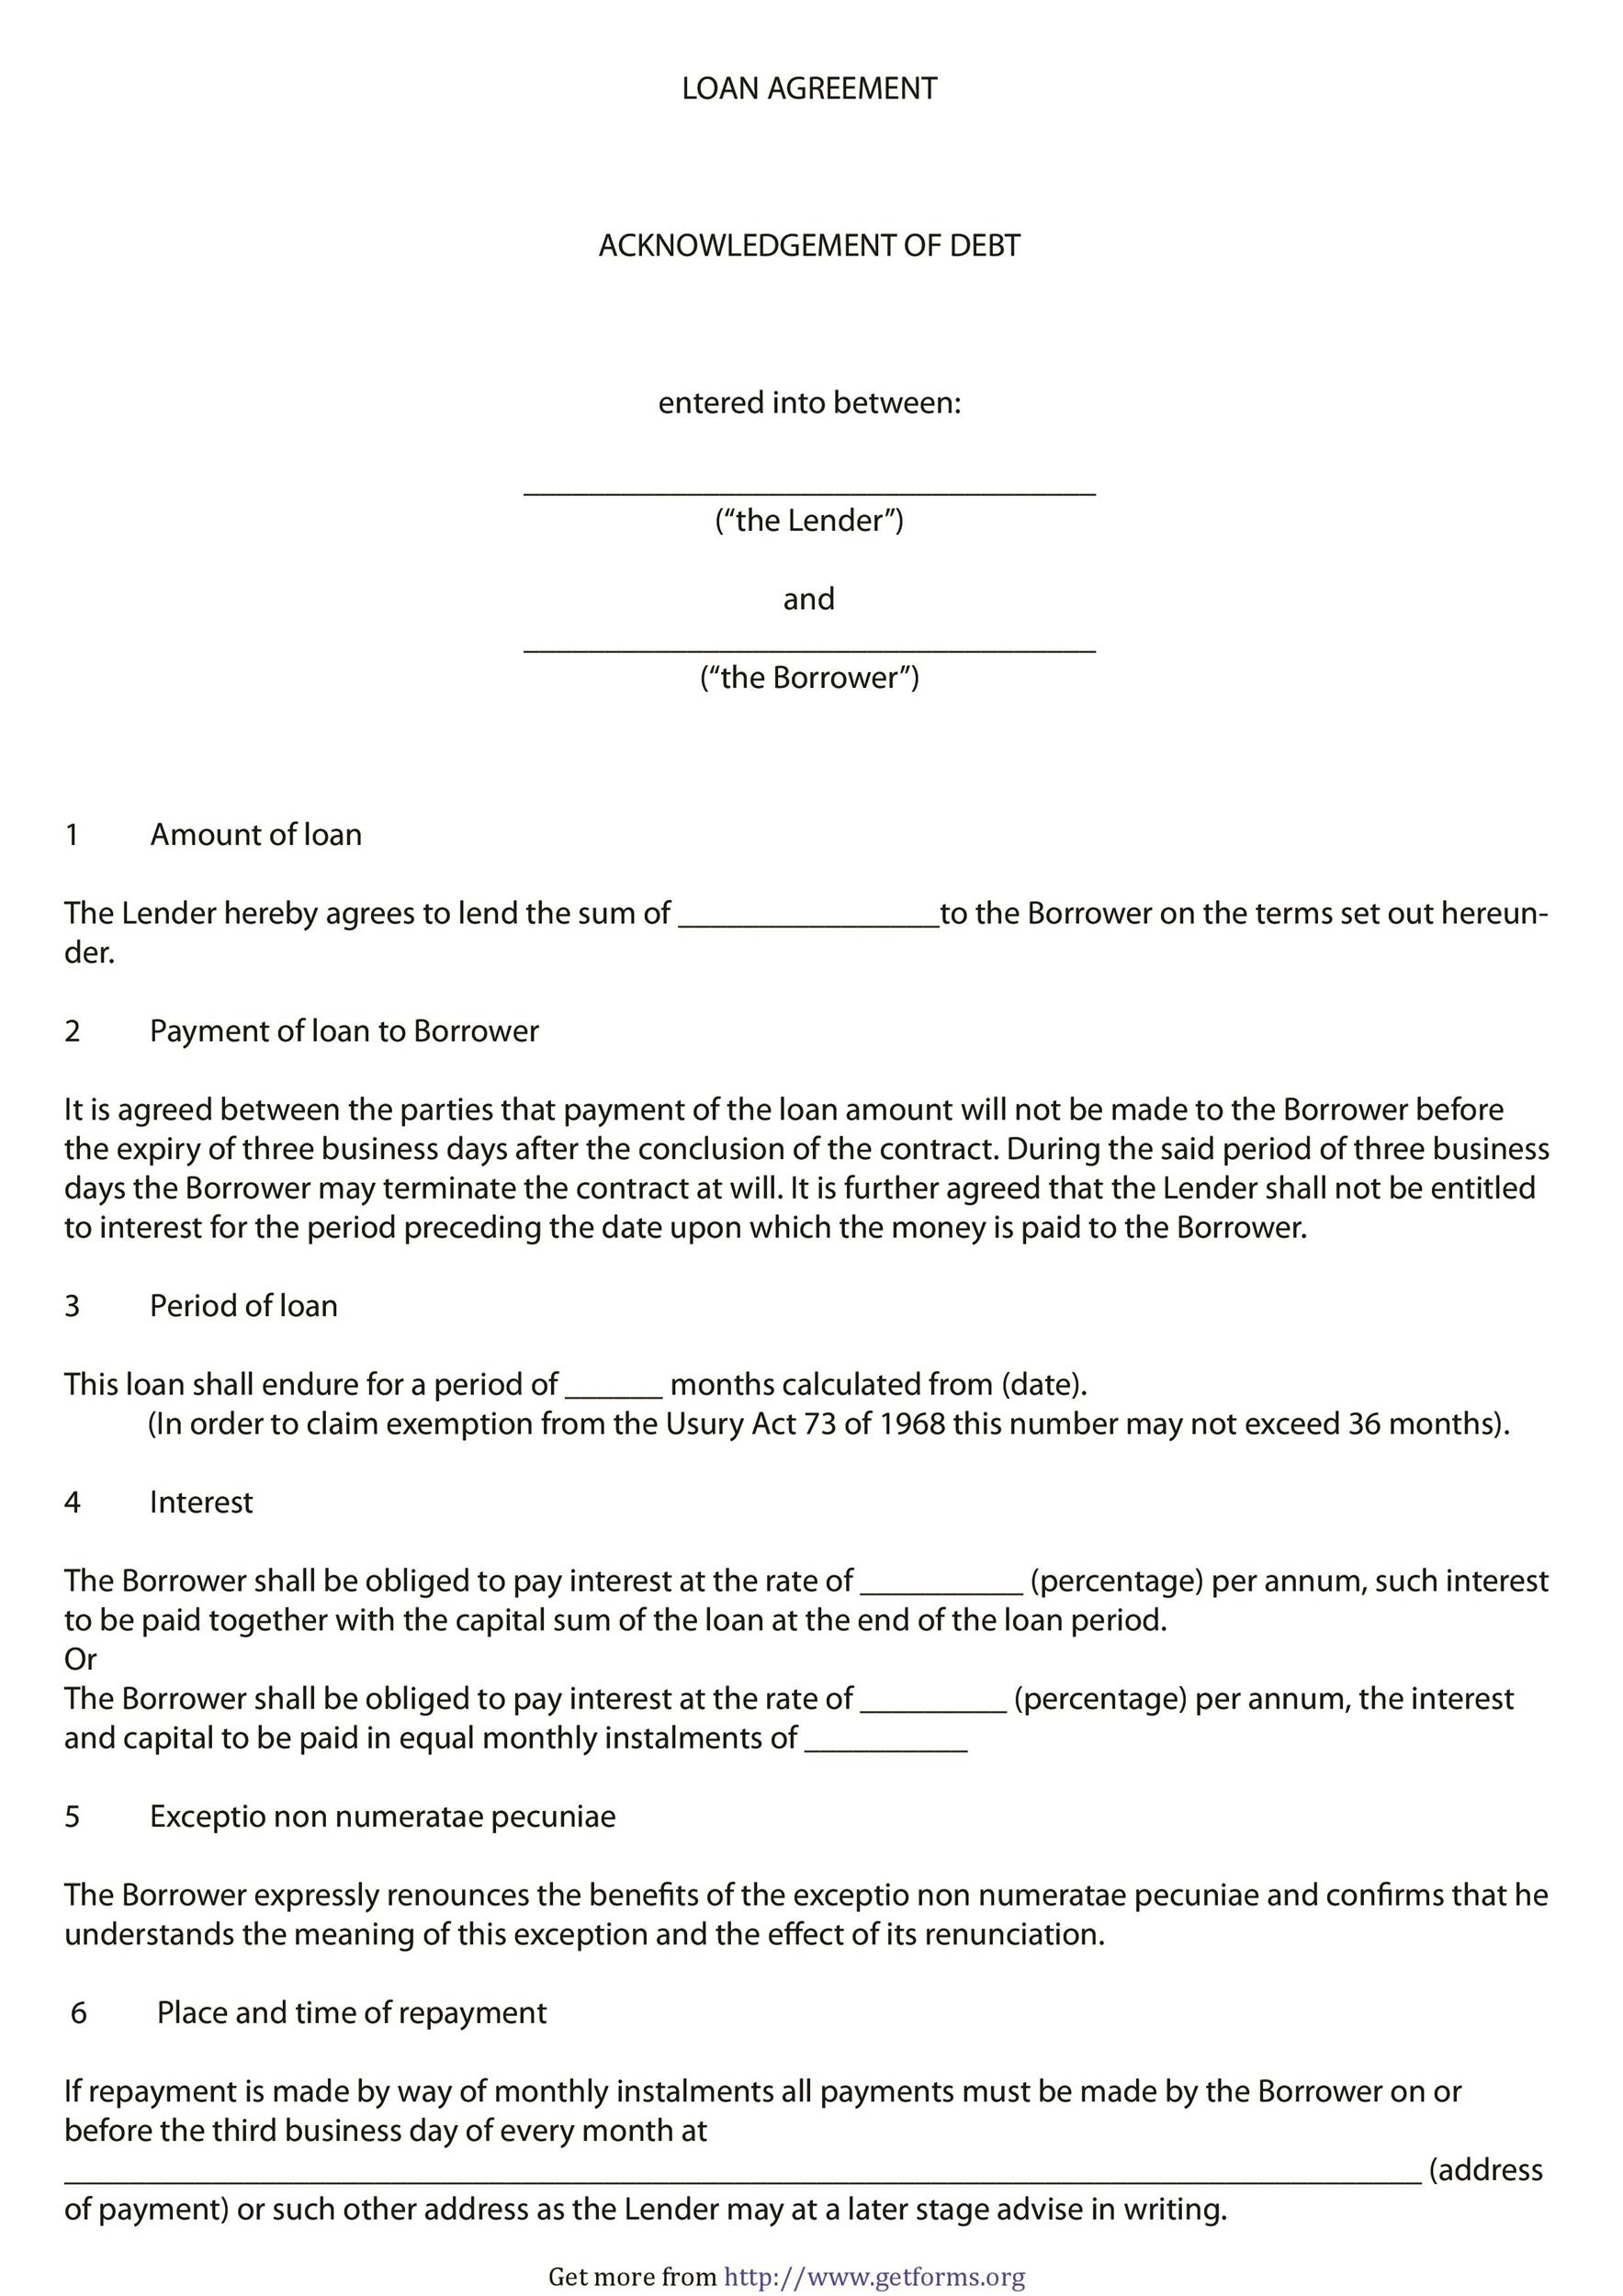 Free loan agreement template 23